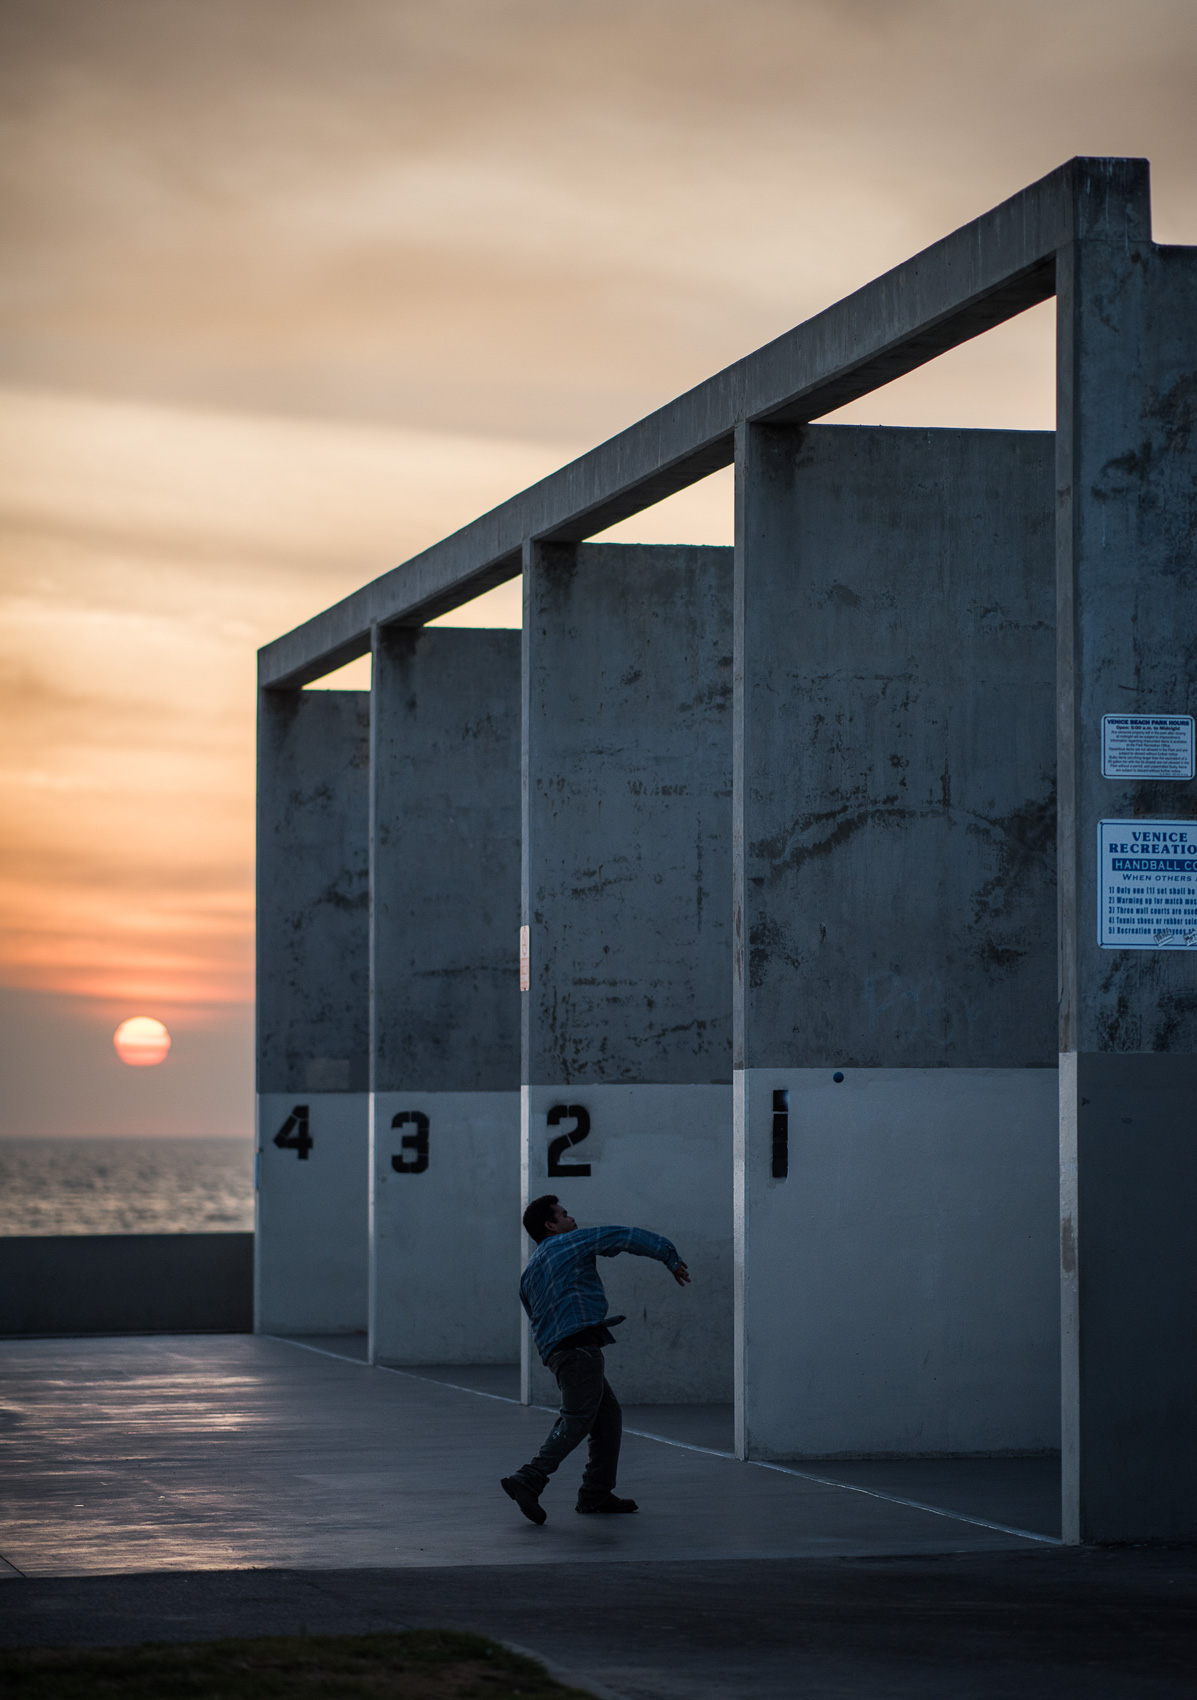 A man plays handball at sunset at the Venice Beach handball courts in Los Angeles.